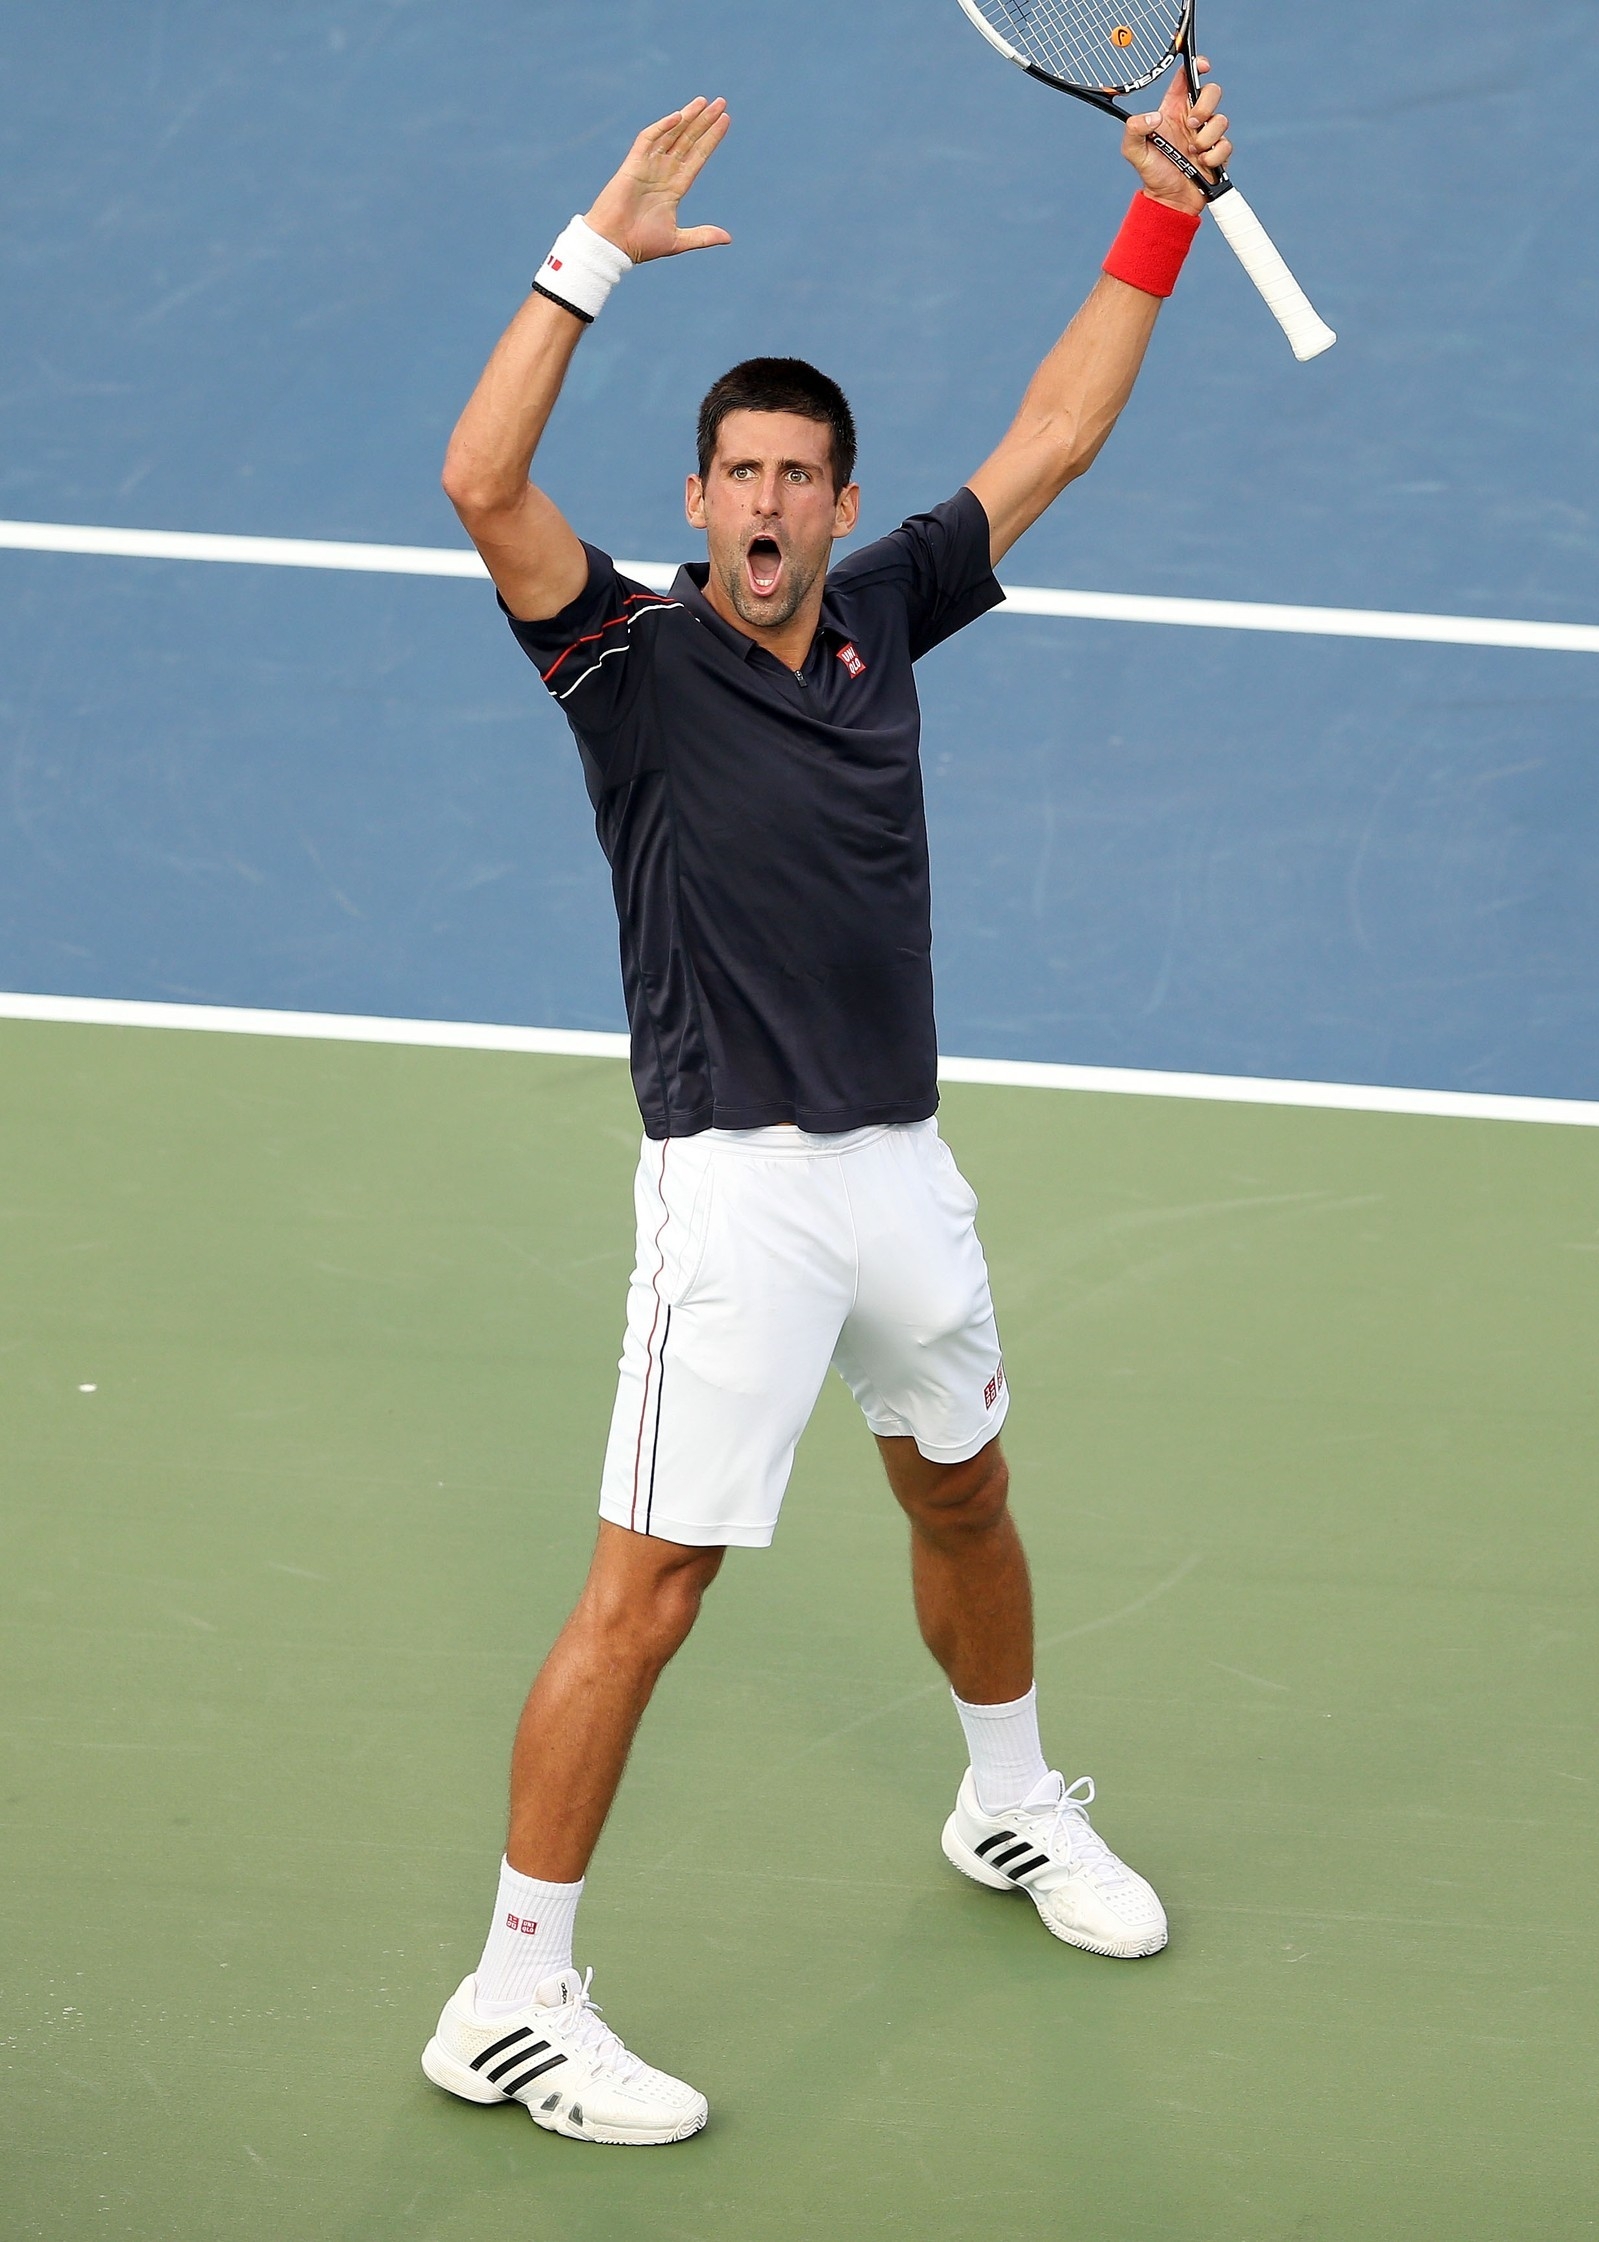 Djokovic advances at Toronto Masters